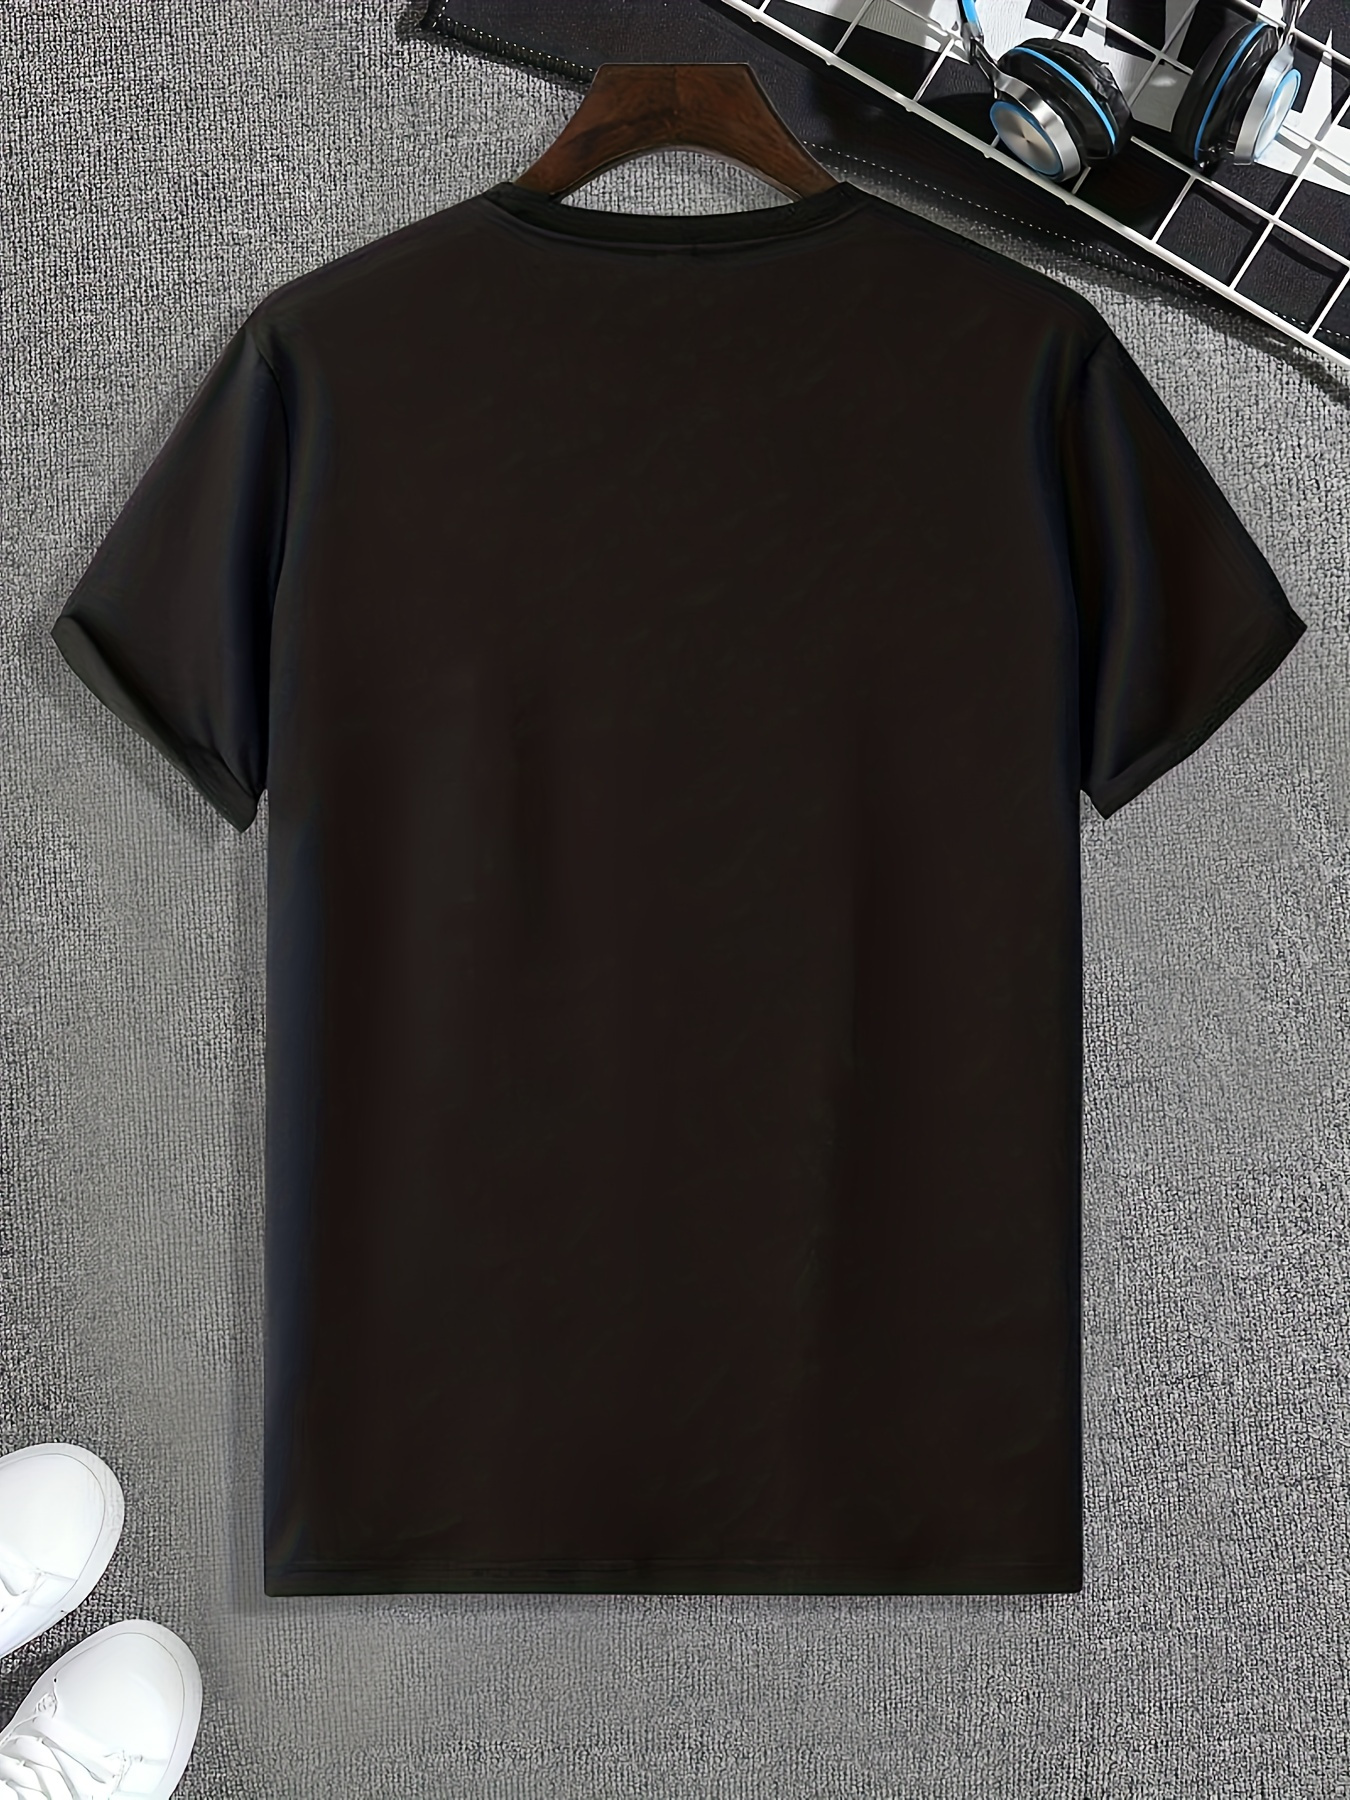 Purple Brand T-Shirt, Sunset Print Black